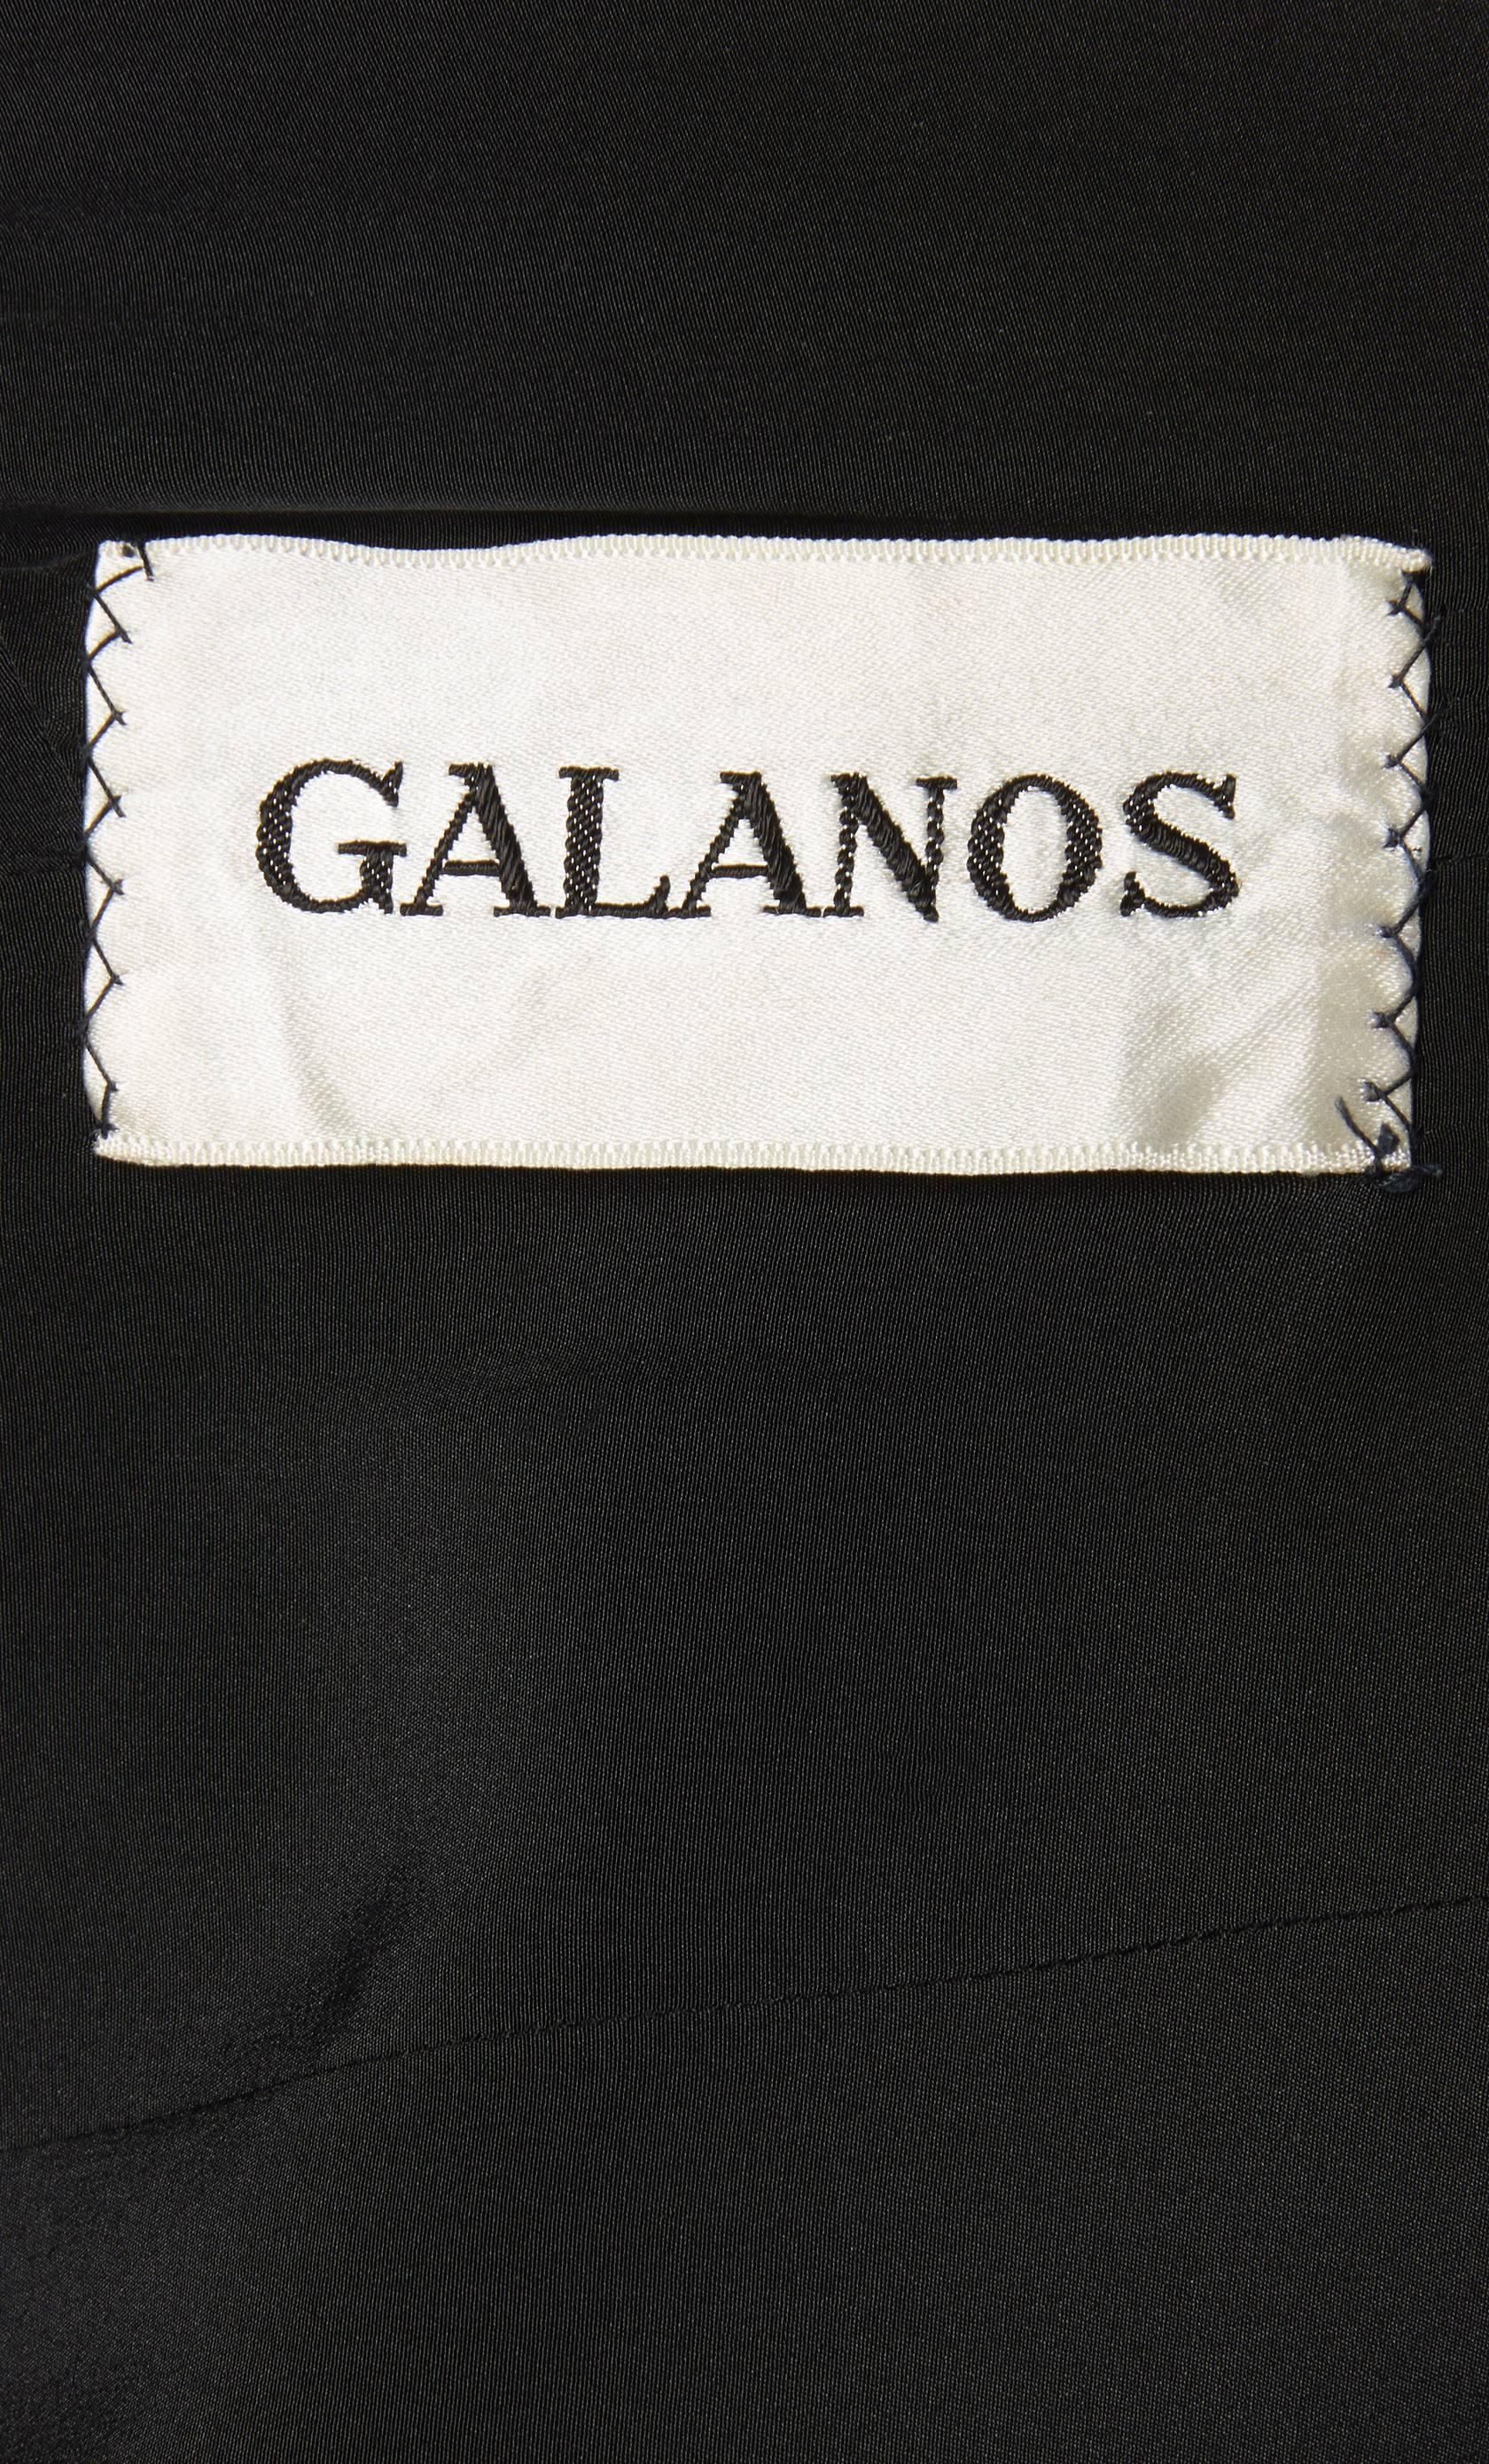 Women's Galanos black dress, circa 1965